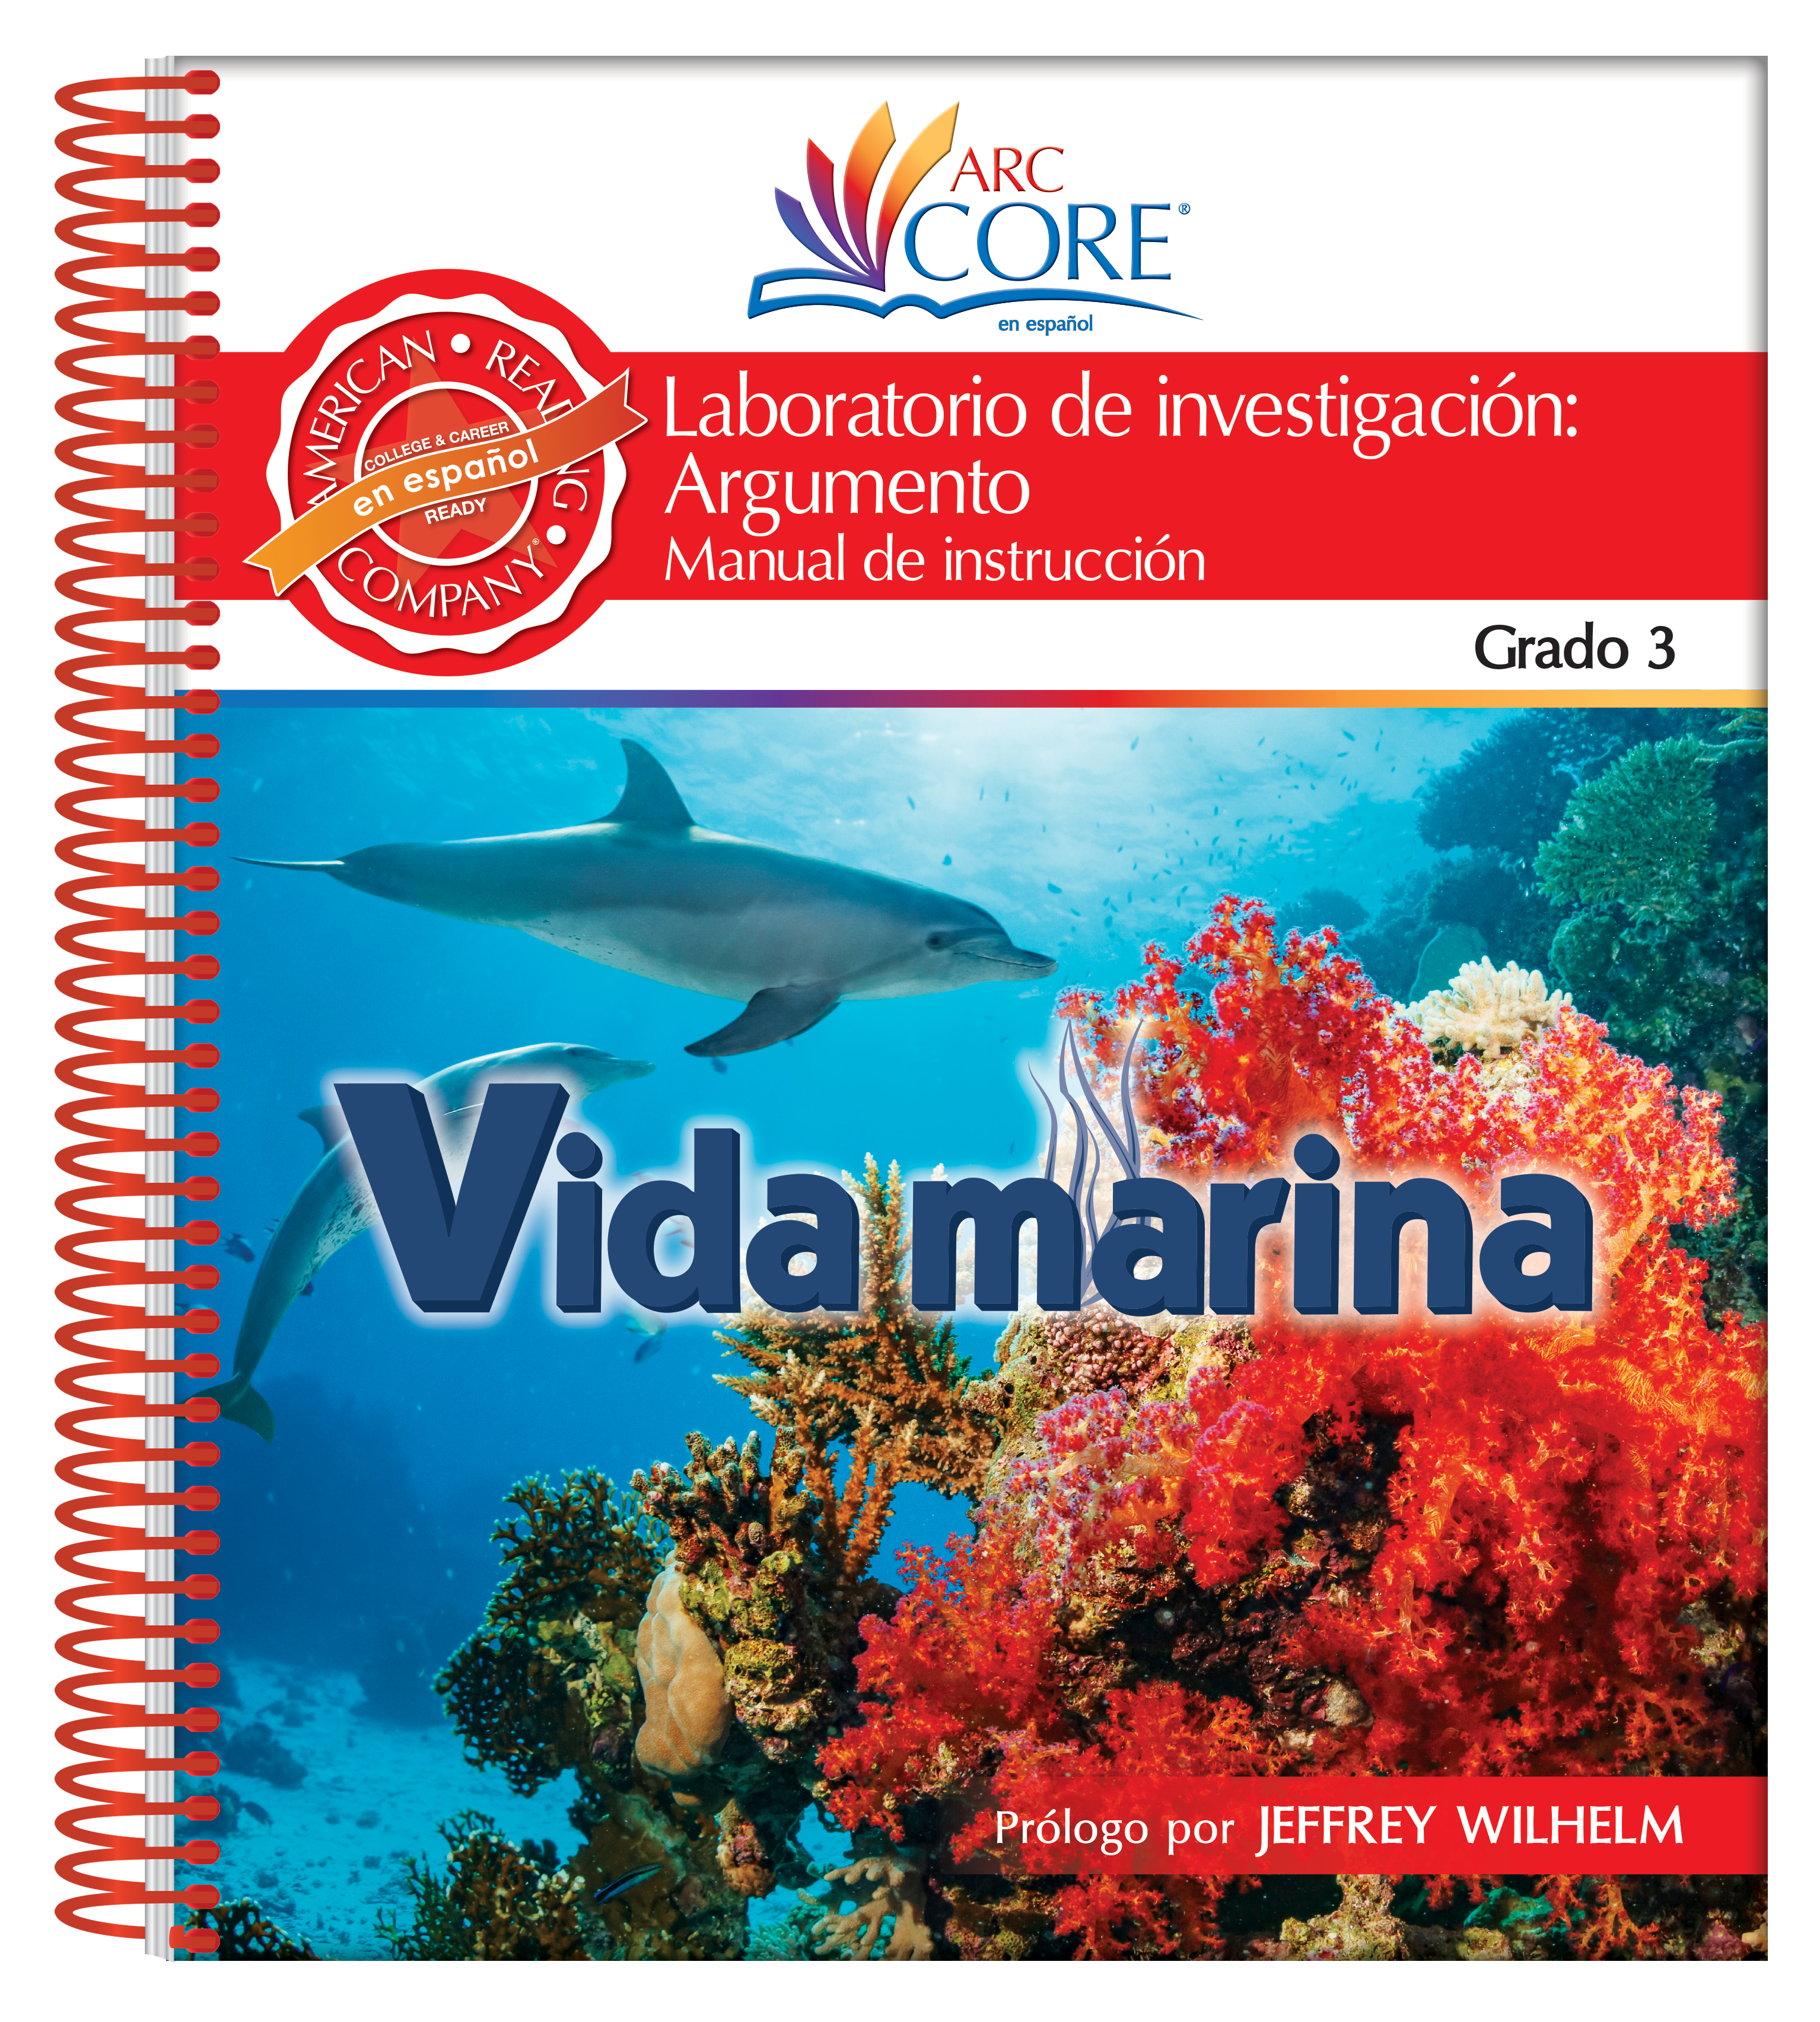 Vida marina Framework Cover